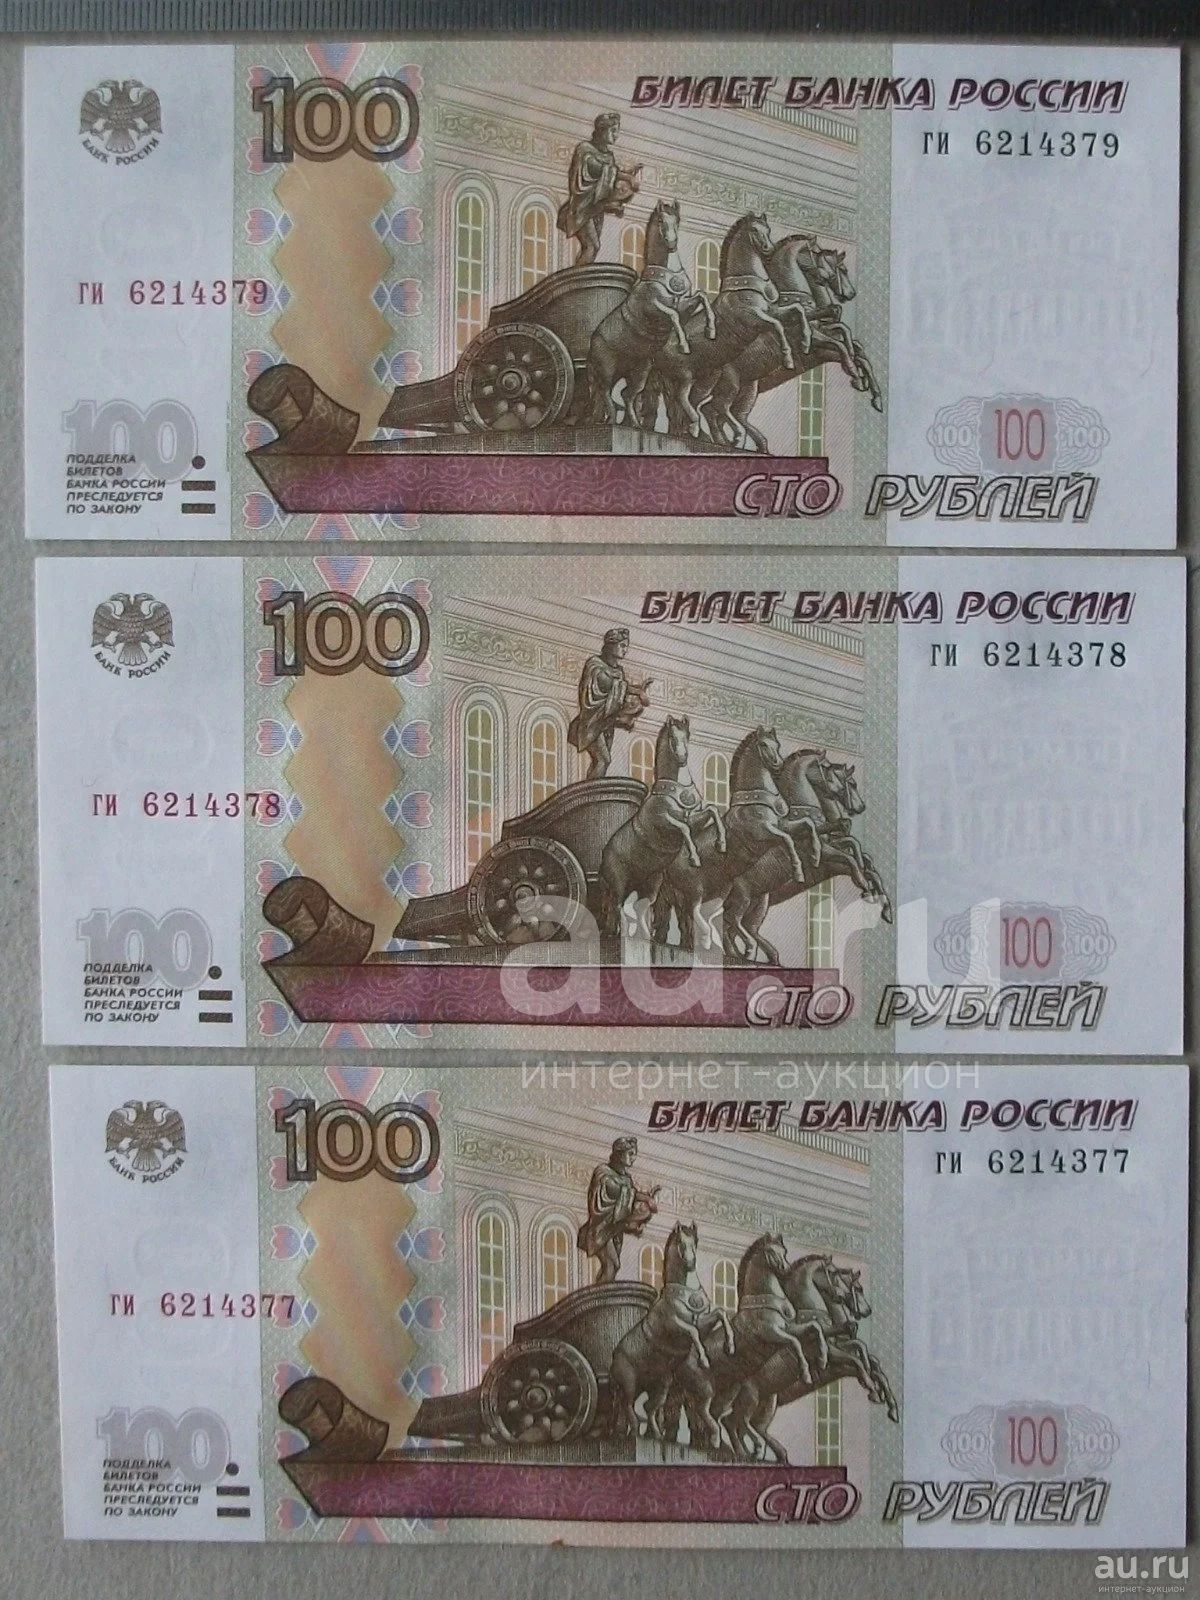 СТО рублей. 100 Рублей. 1 Рубль 100 копеек.